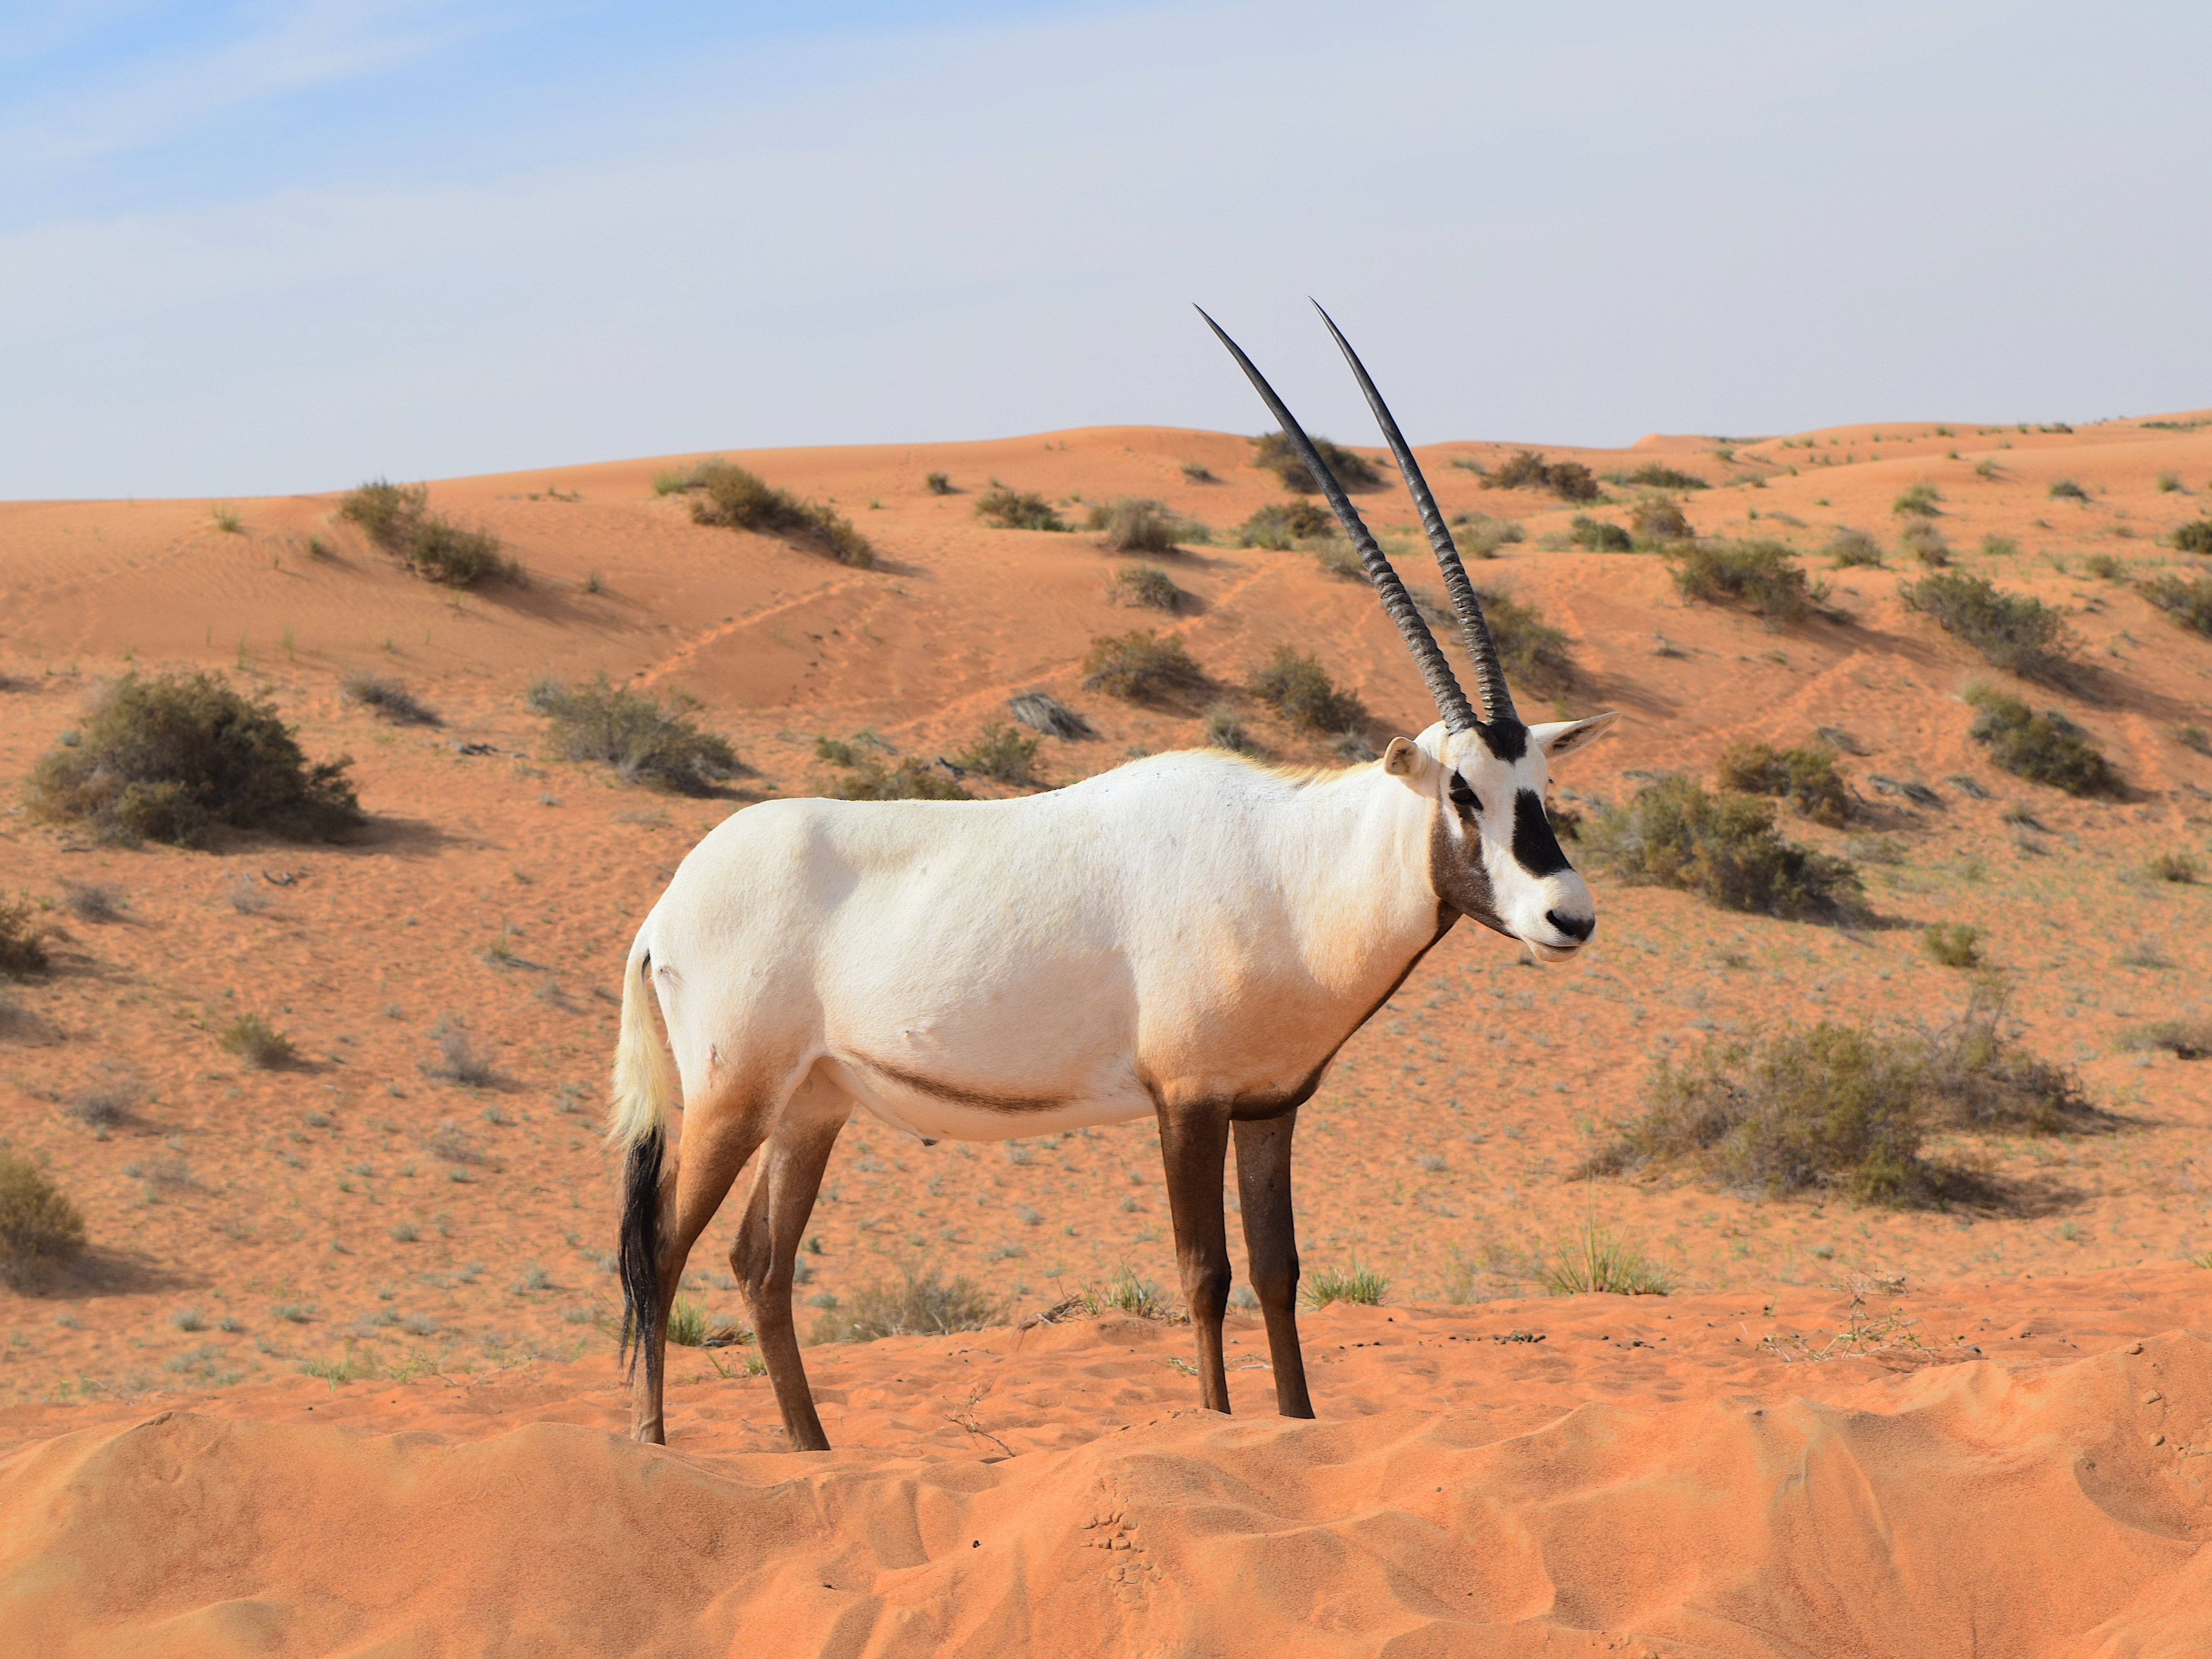 The Arabian oryx is the national animal of Dubai